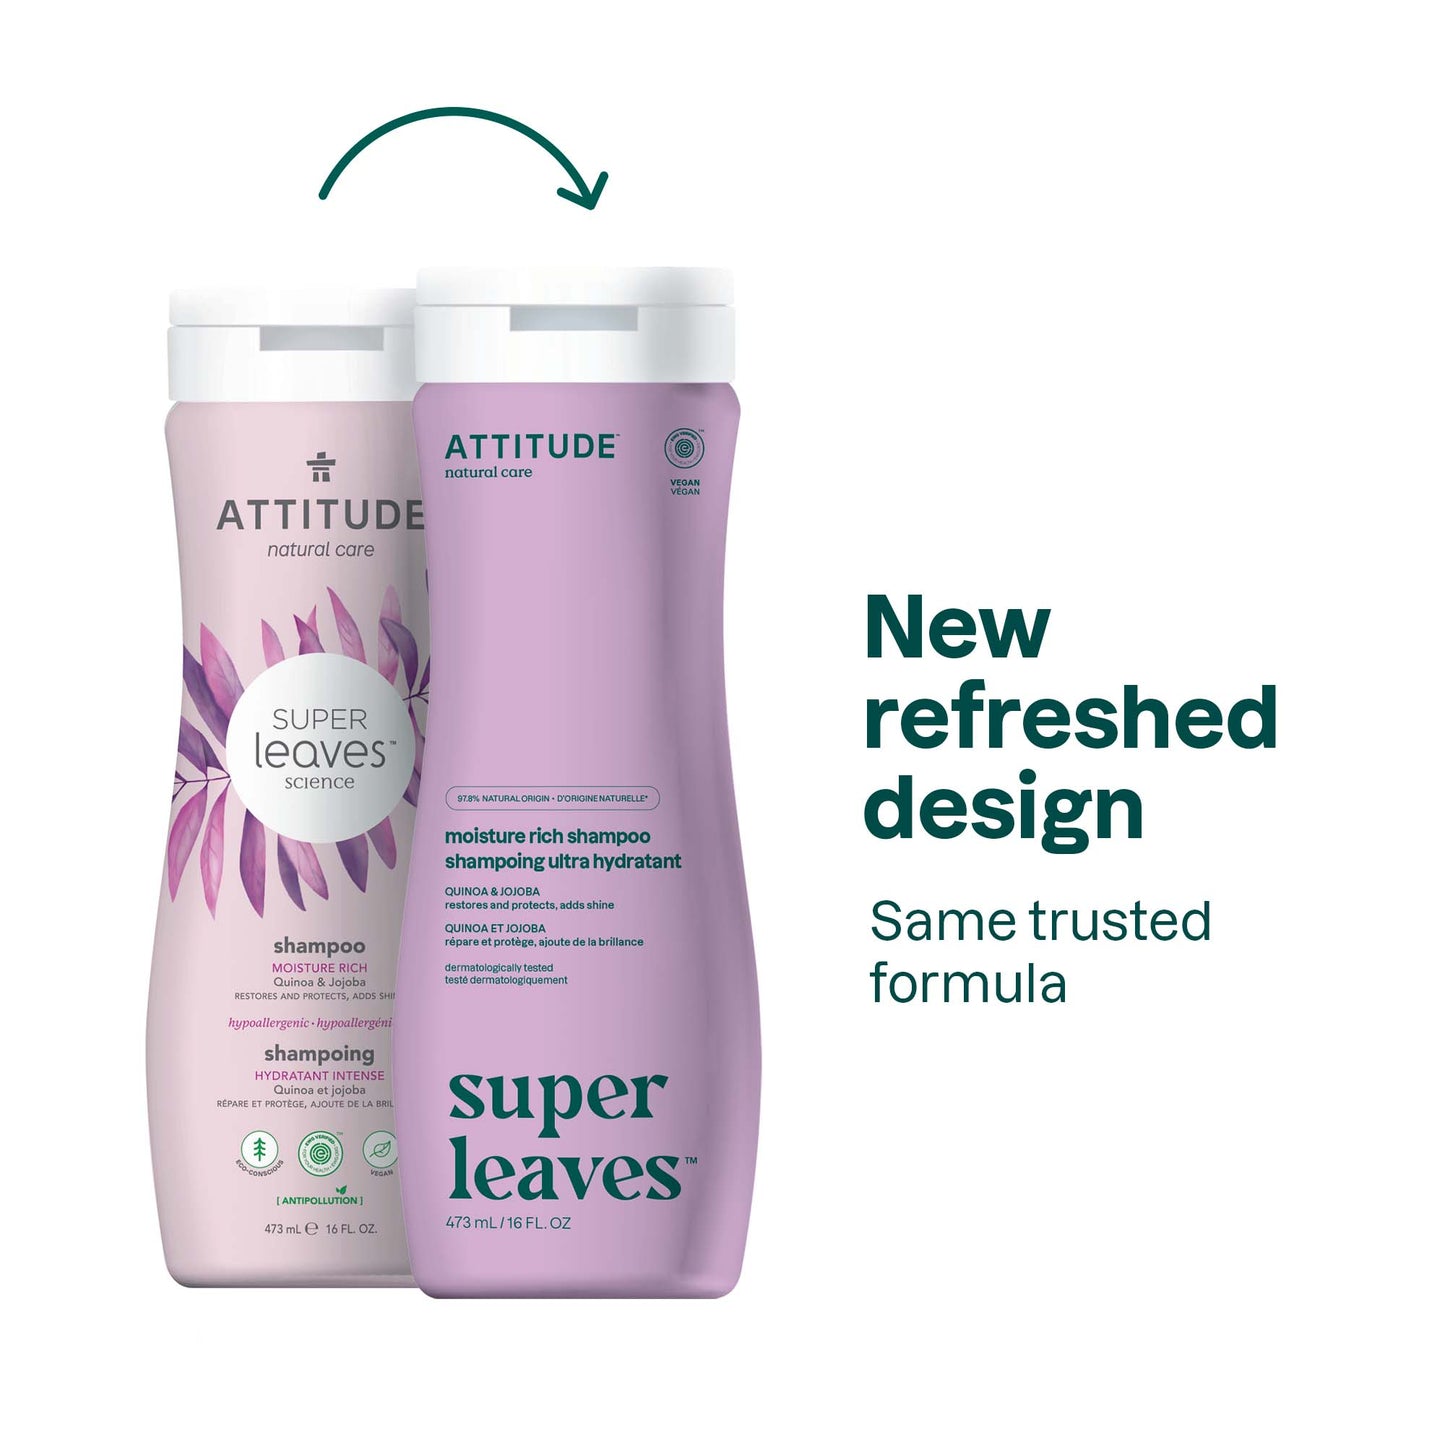 ATTITUDE Super leaves™ Shampoo Moisture Rich Restores and protects, adds shine 11007_en? 16 FL. OZ.